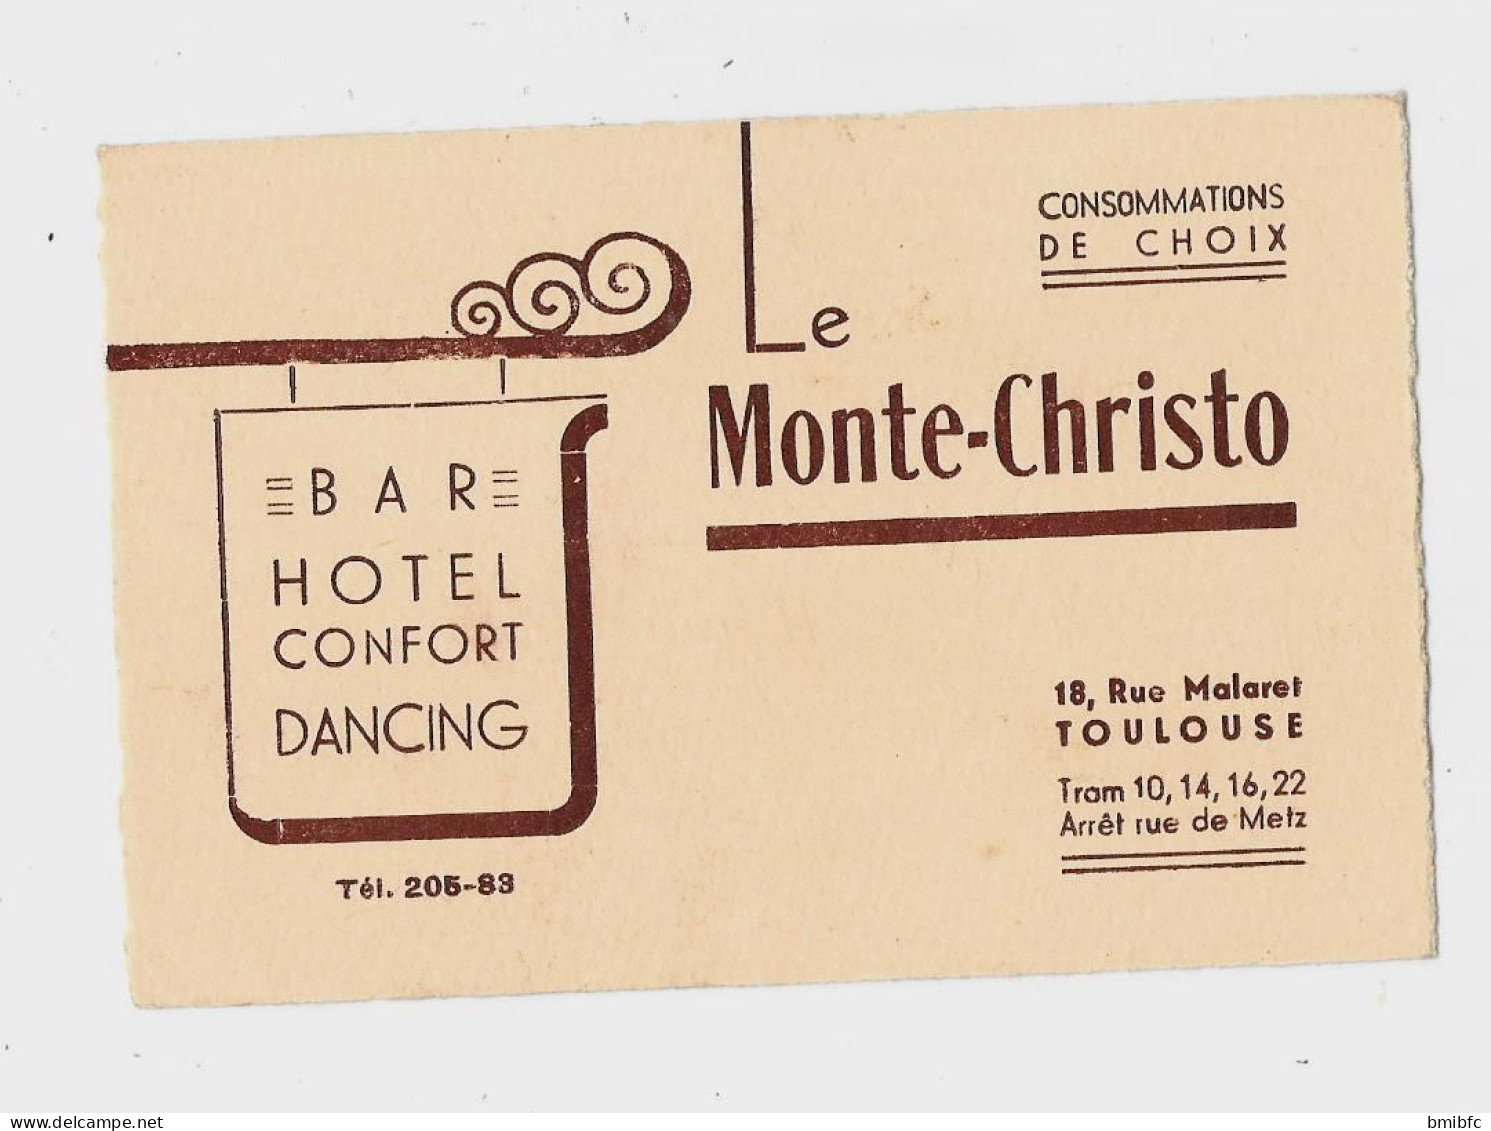 BAR HOTEL CONFORT DANCING Tél  205-83 Le Monte-Christo 18, Rue Malaret TOULOUSE Tram 10,14,16,22 - Visiting Cards